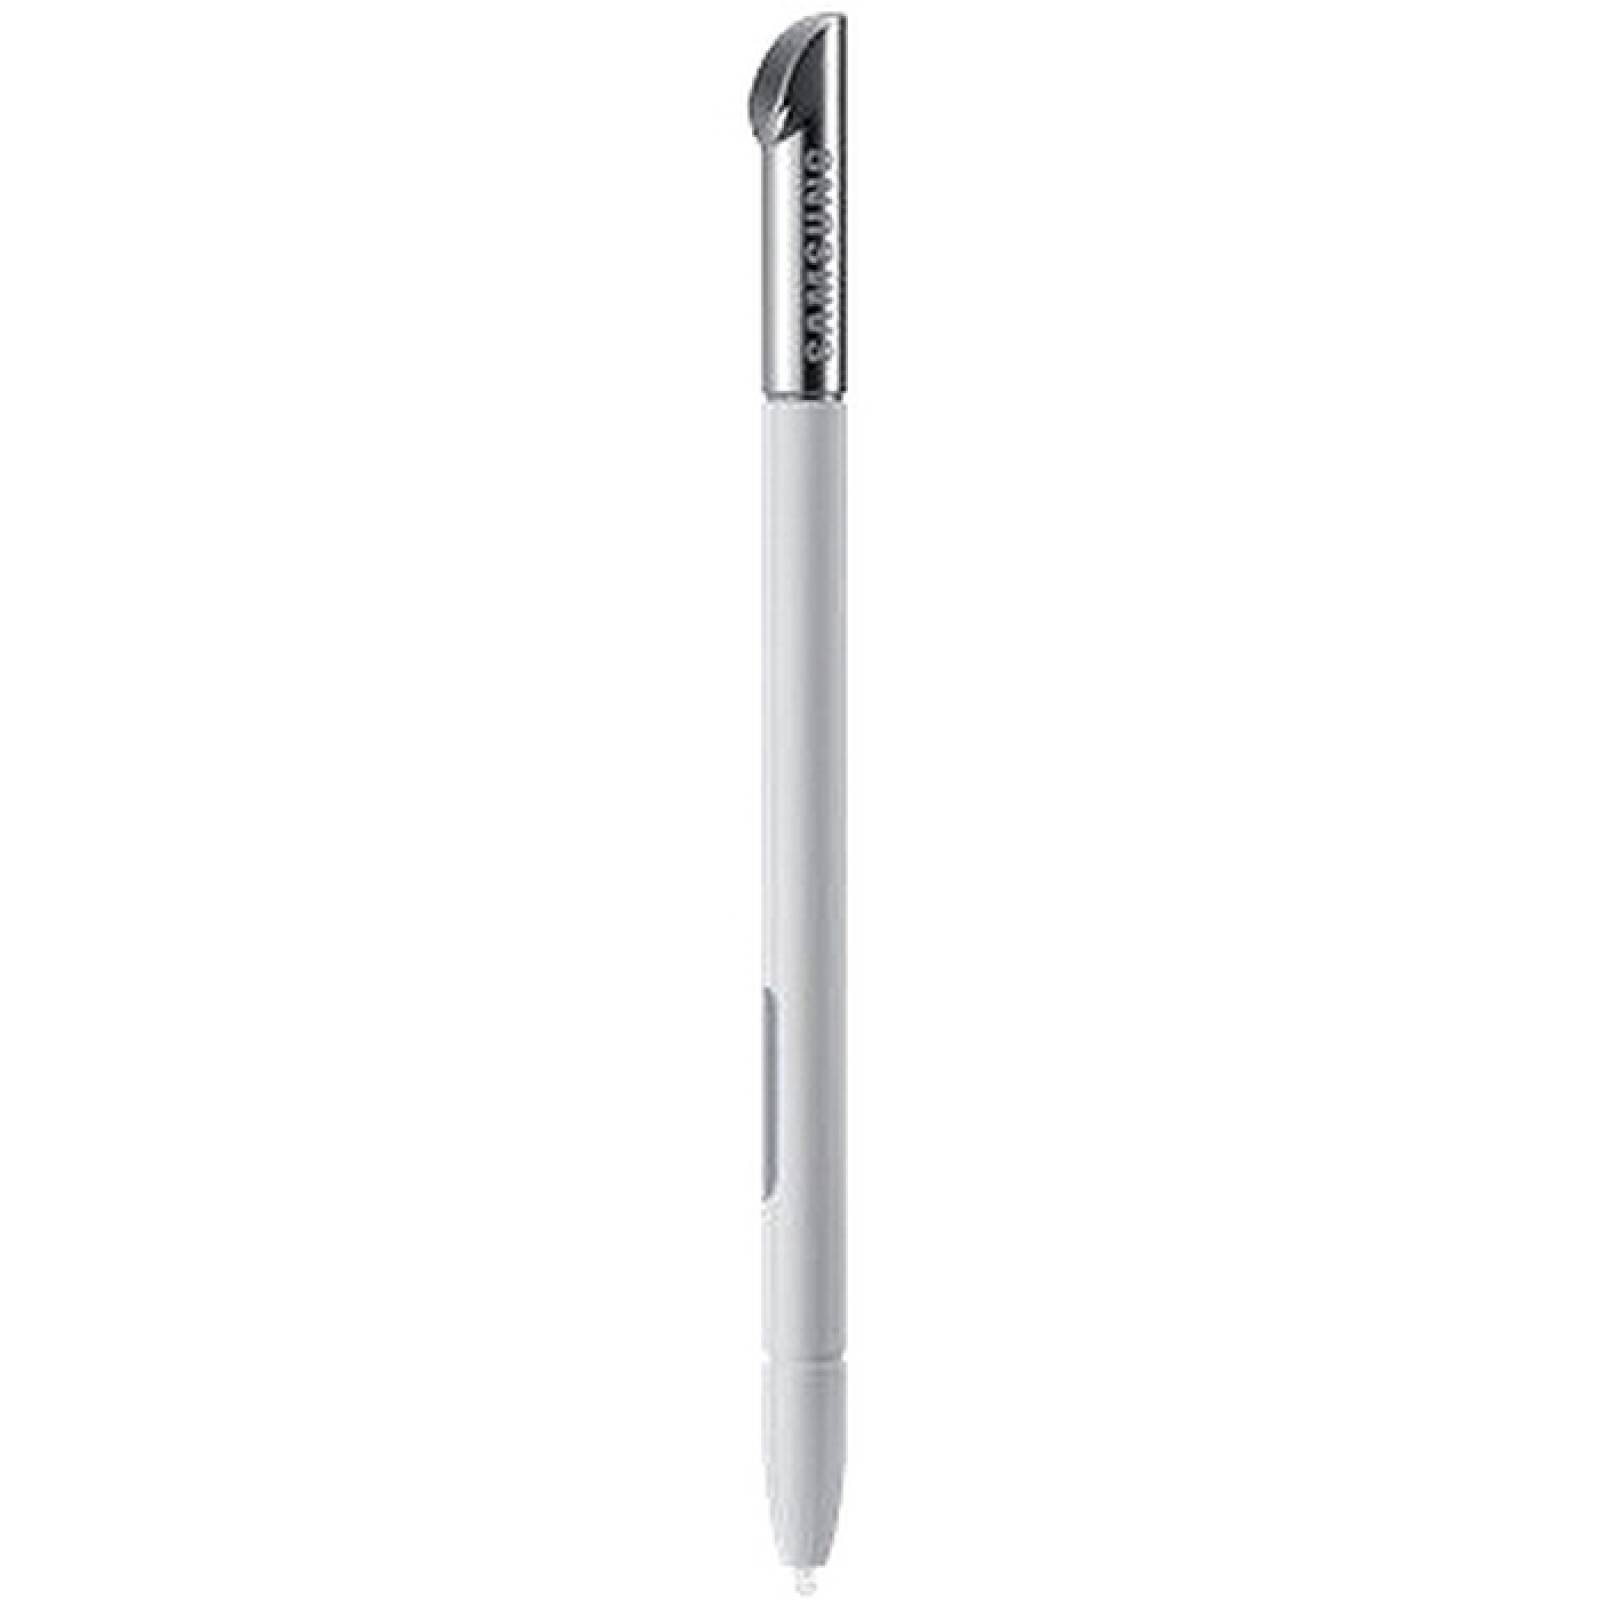 Arclyte original Samsung S Pen Galaxy Note II ATampT SGHI317 Galaxy Note II Sprint SPHL